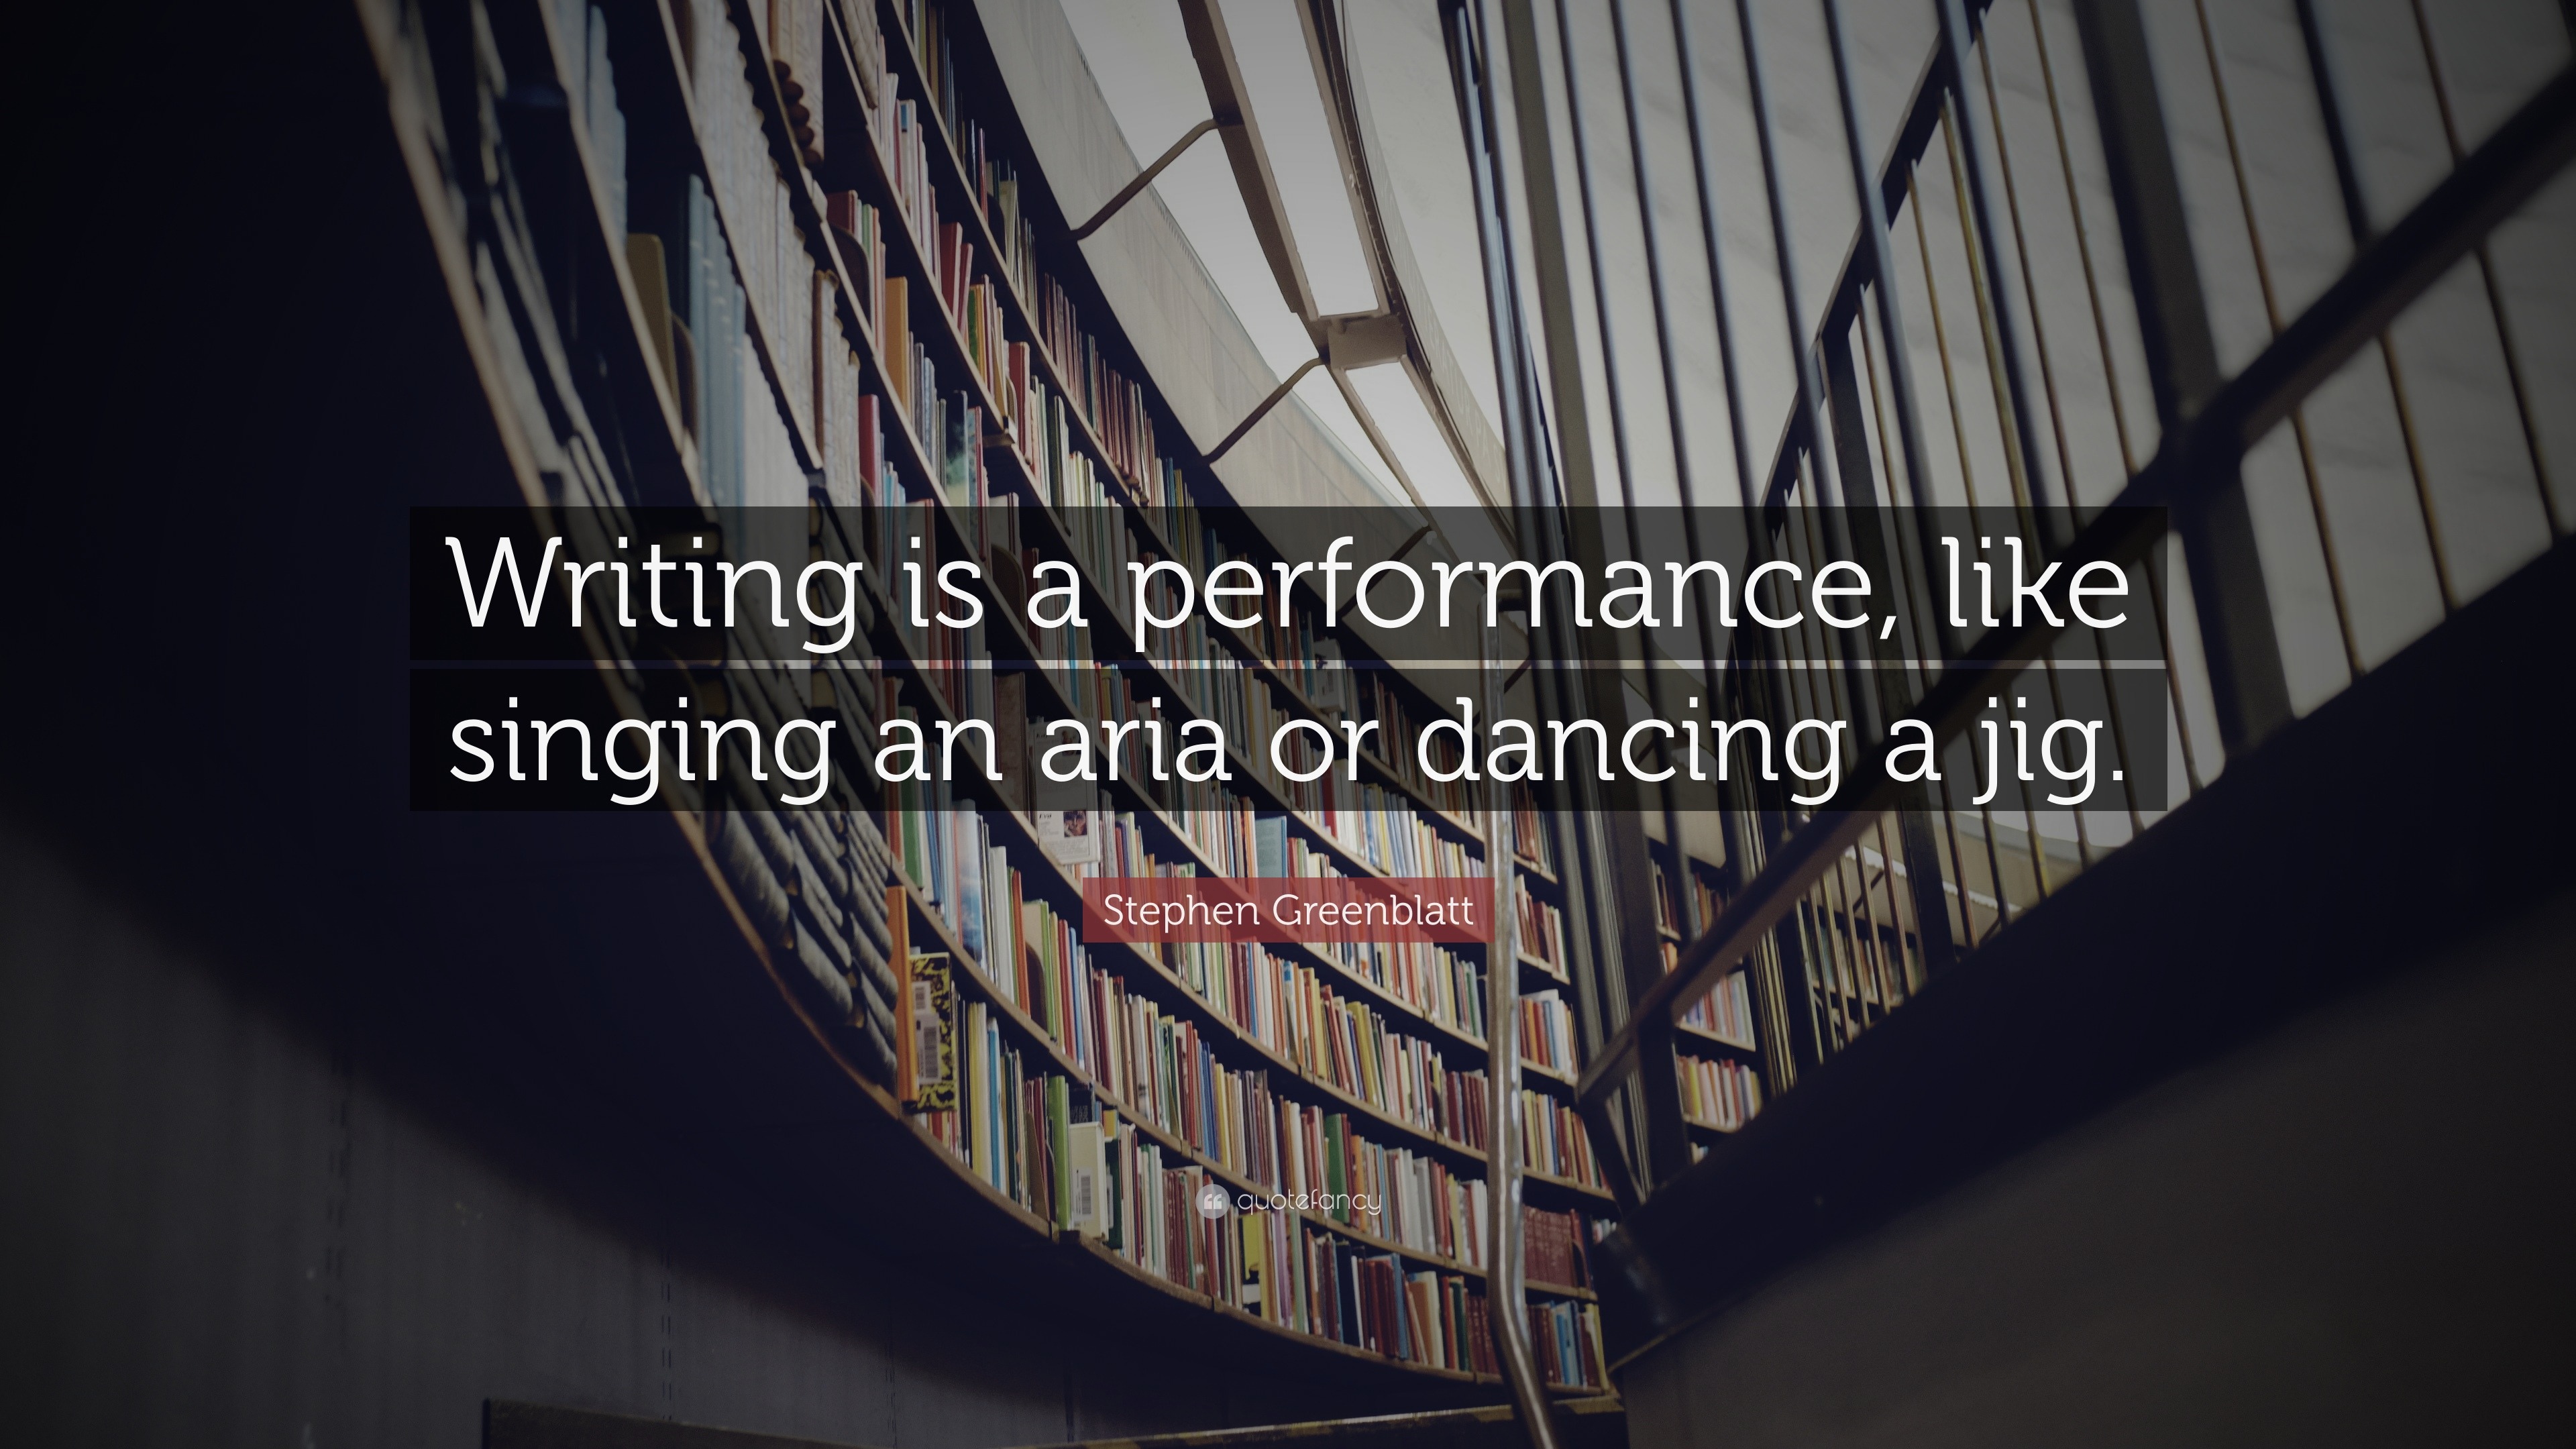 Stephen Greenblatt Quote: “Writing is a performance, like singing